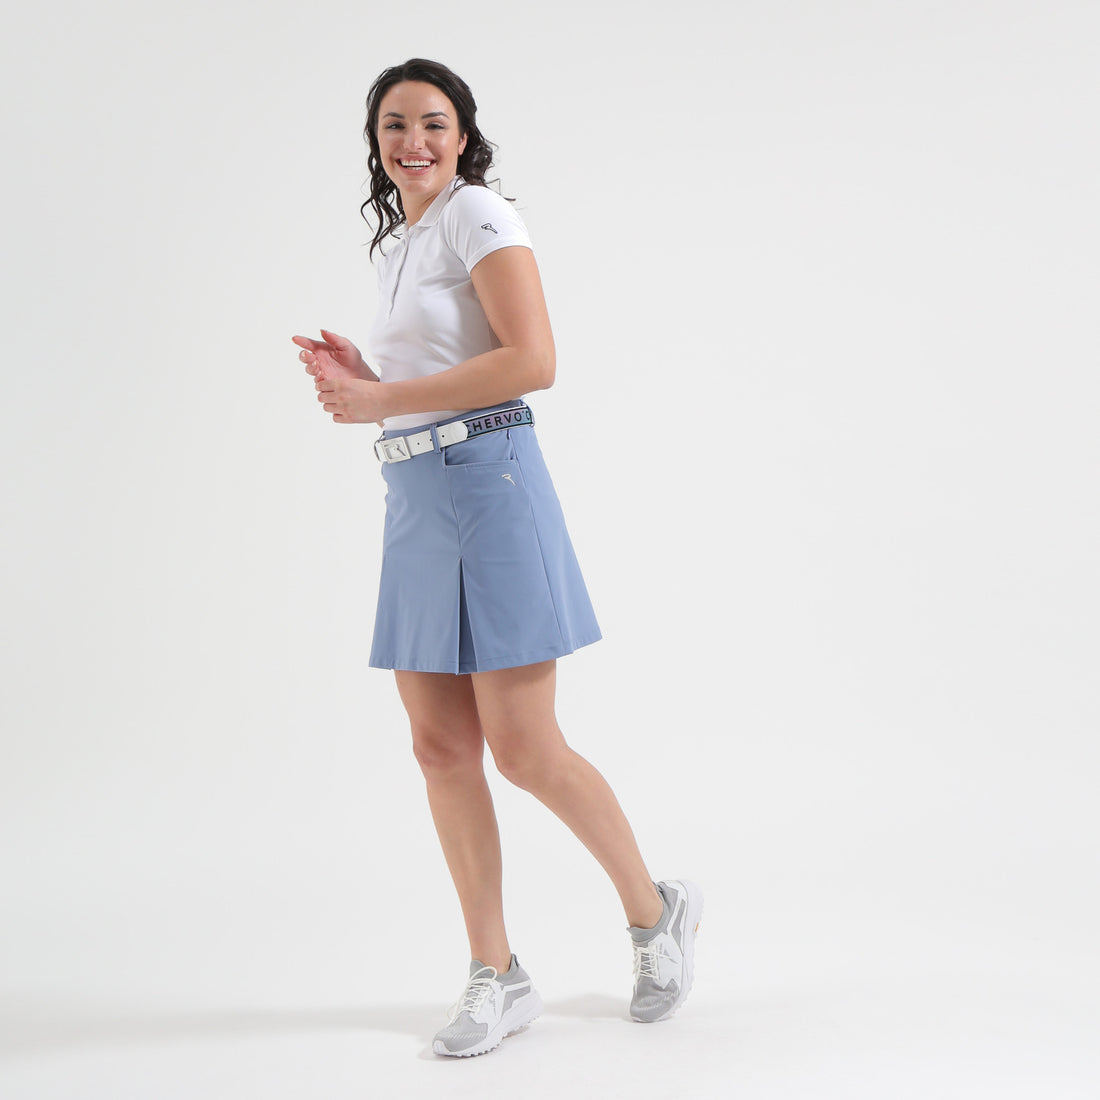 ANIVIVO Women's 21 Knee Length Skorts Skirts Golf Athletic Casual Skort  with Zipper Pockets High Waist